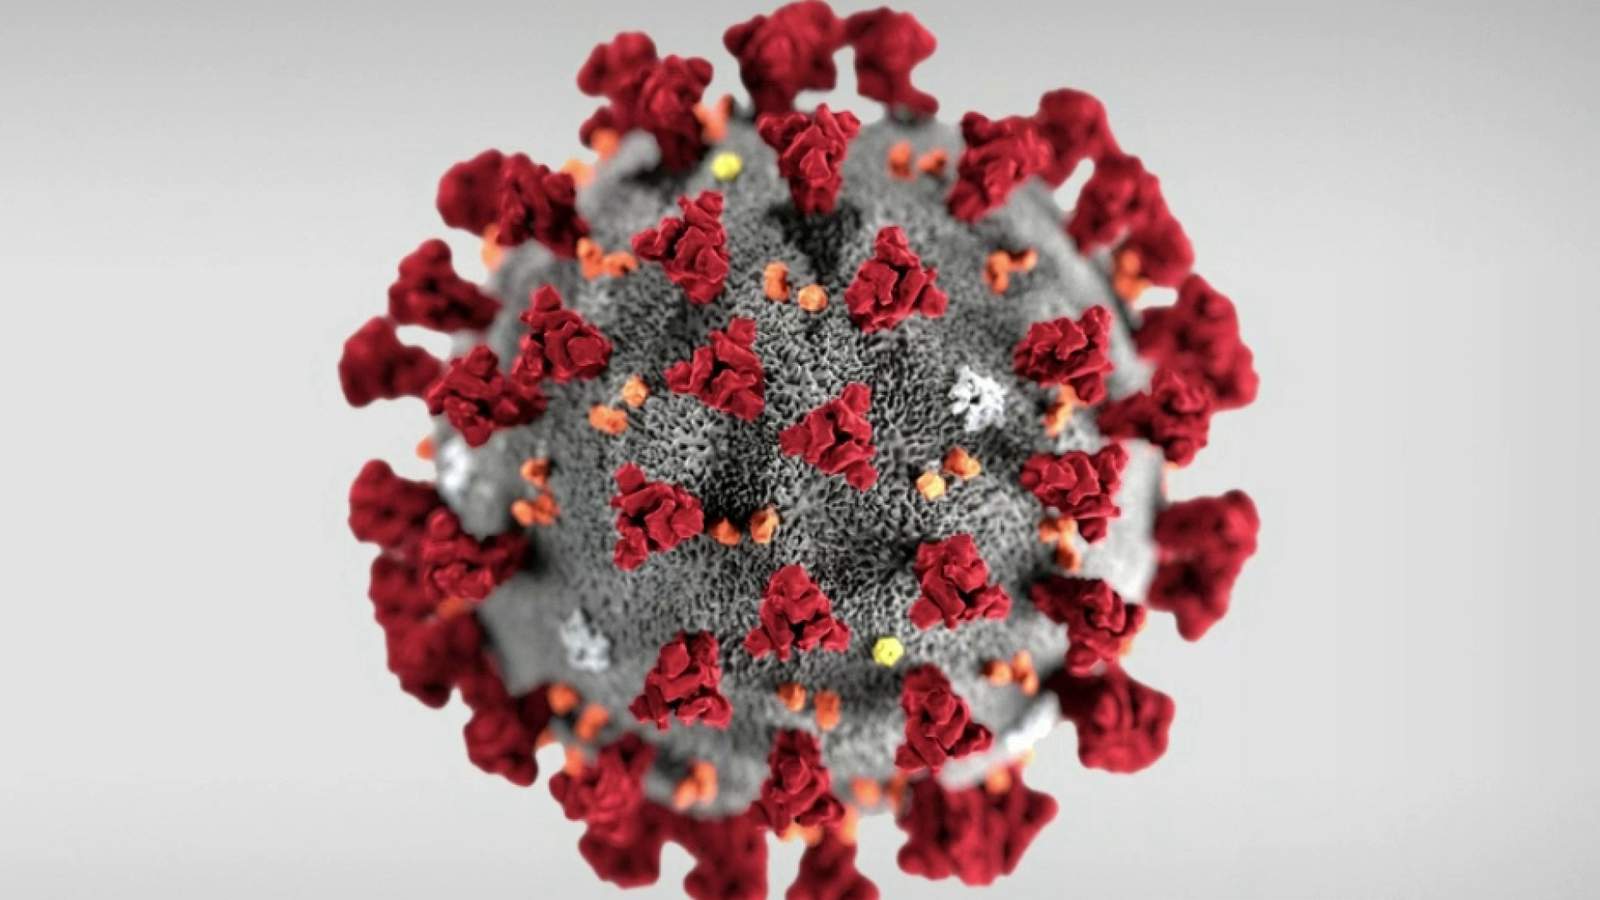 Michigan reports 11 new coronavirus (COVID-19) cases, bringing total to 65